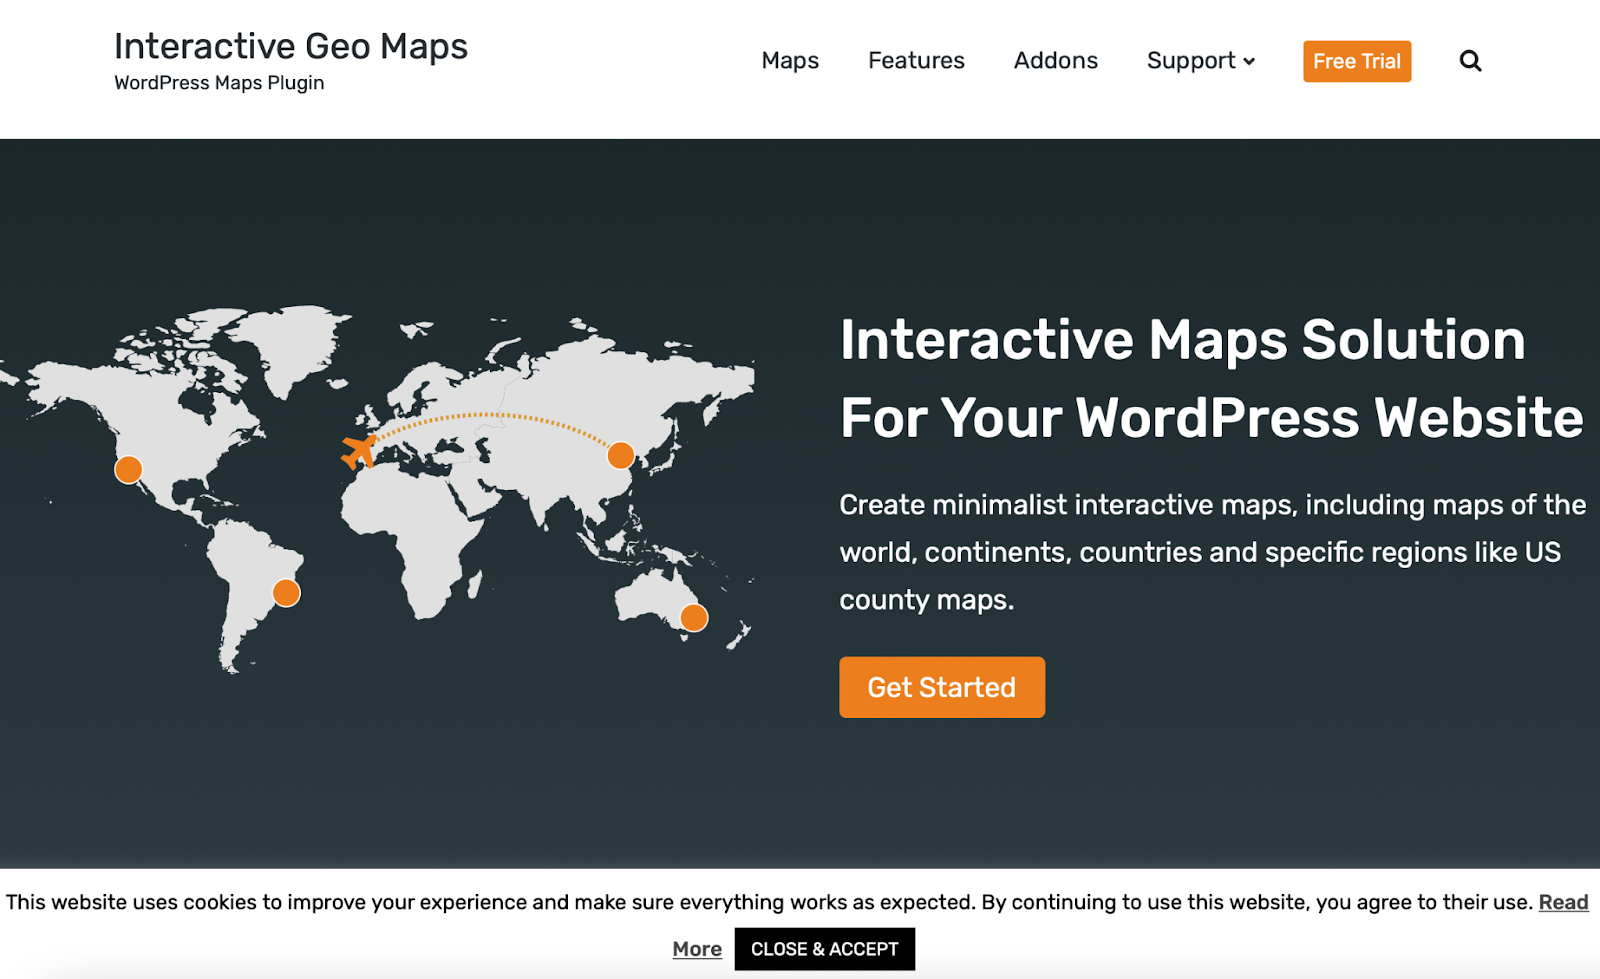 interativo-geo-maps-worpdress-plugin-interface.jpg